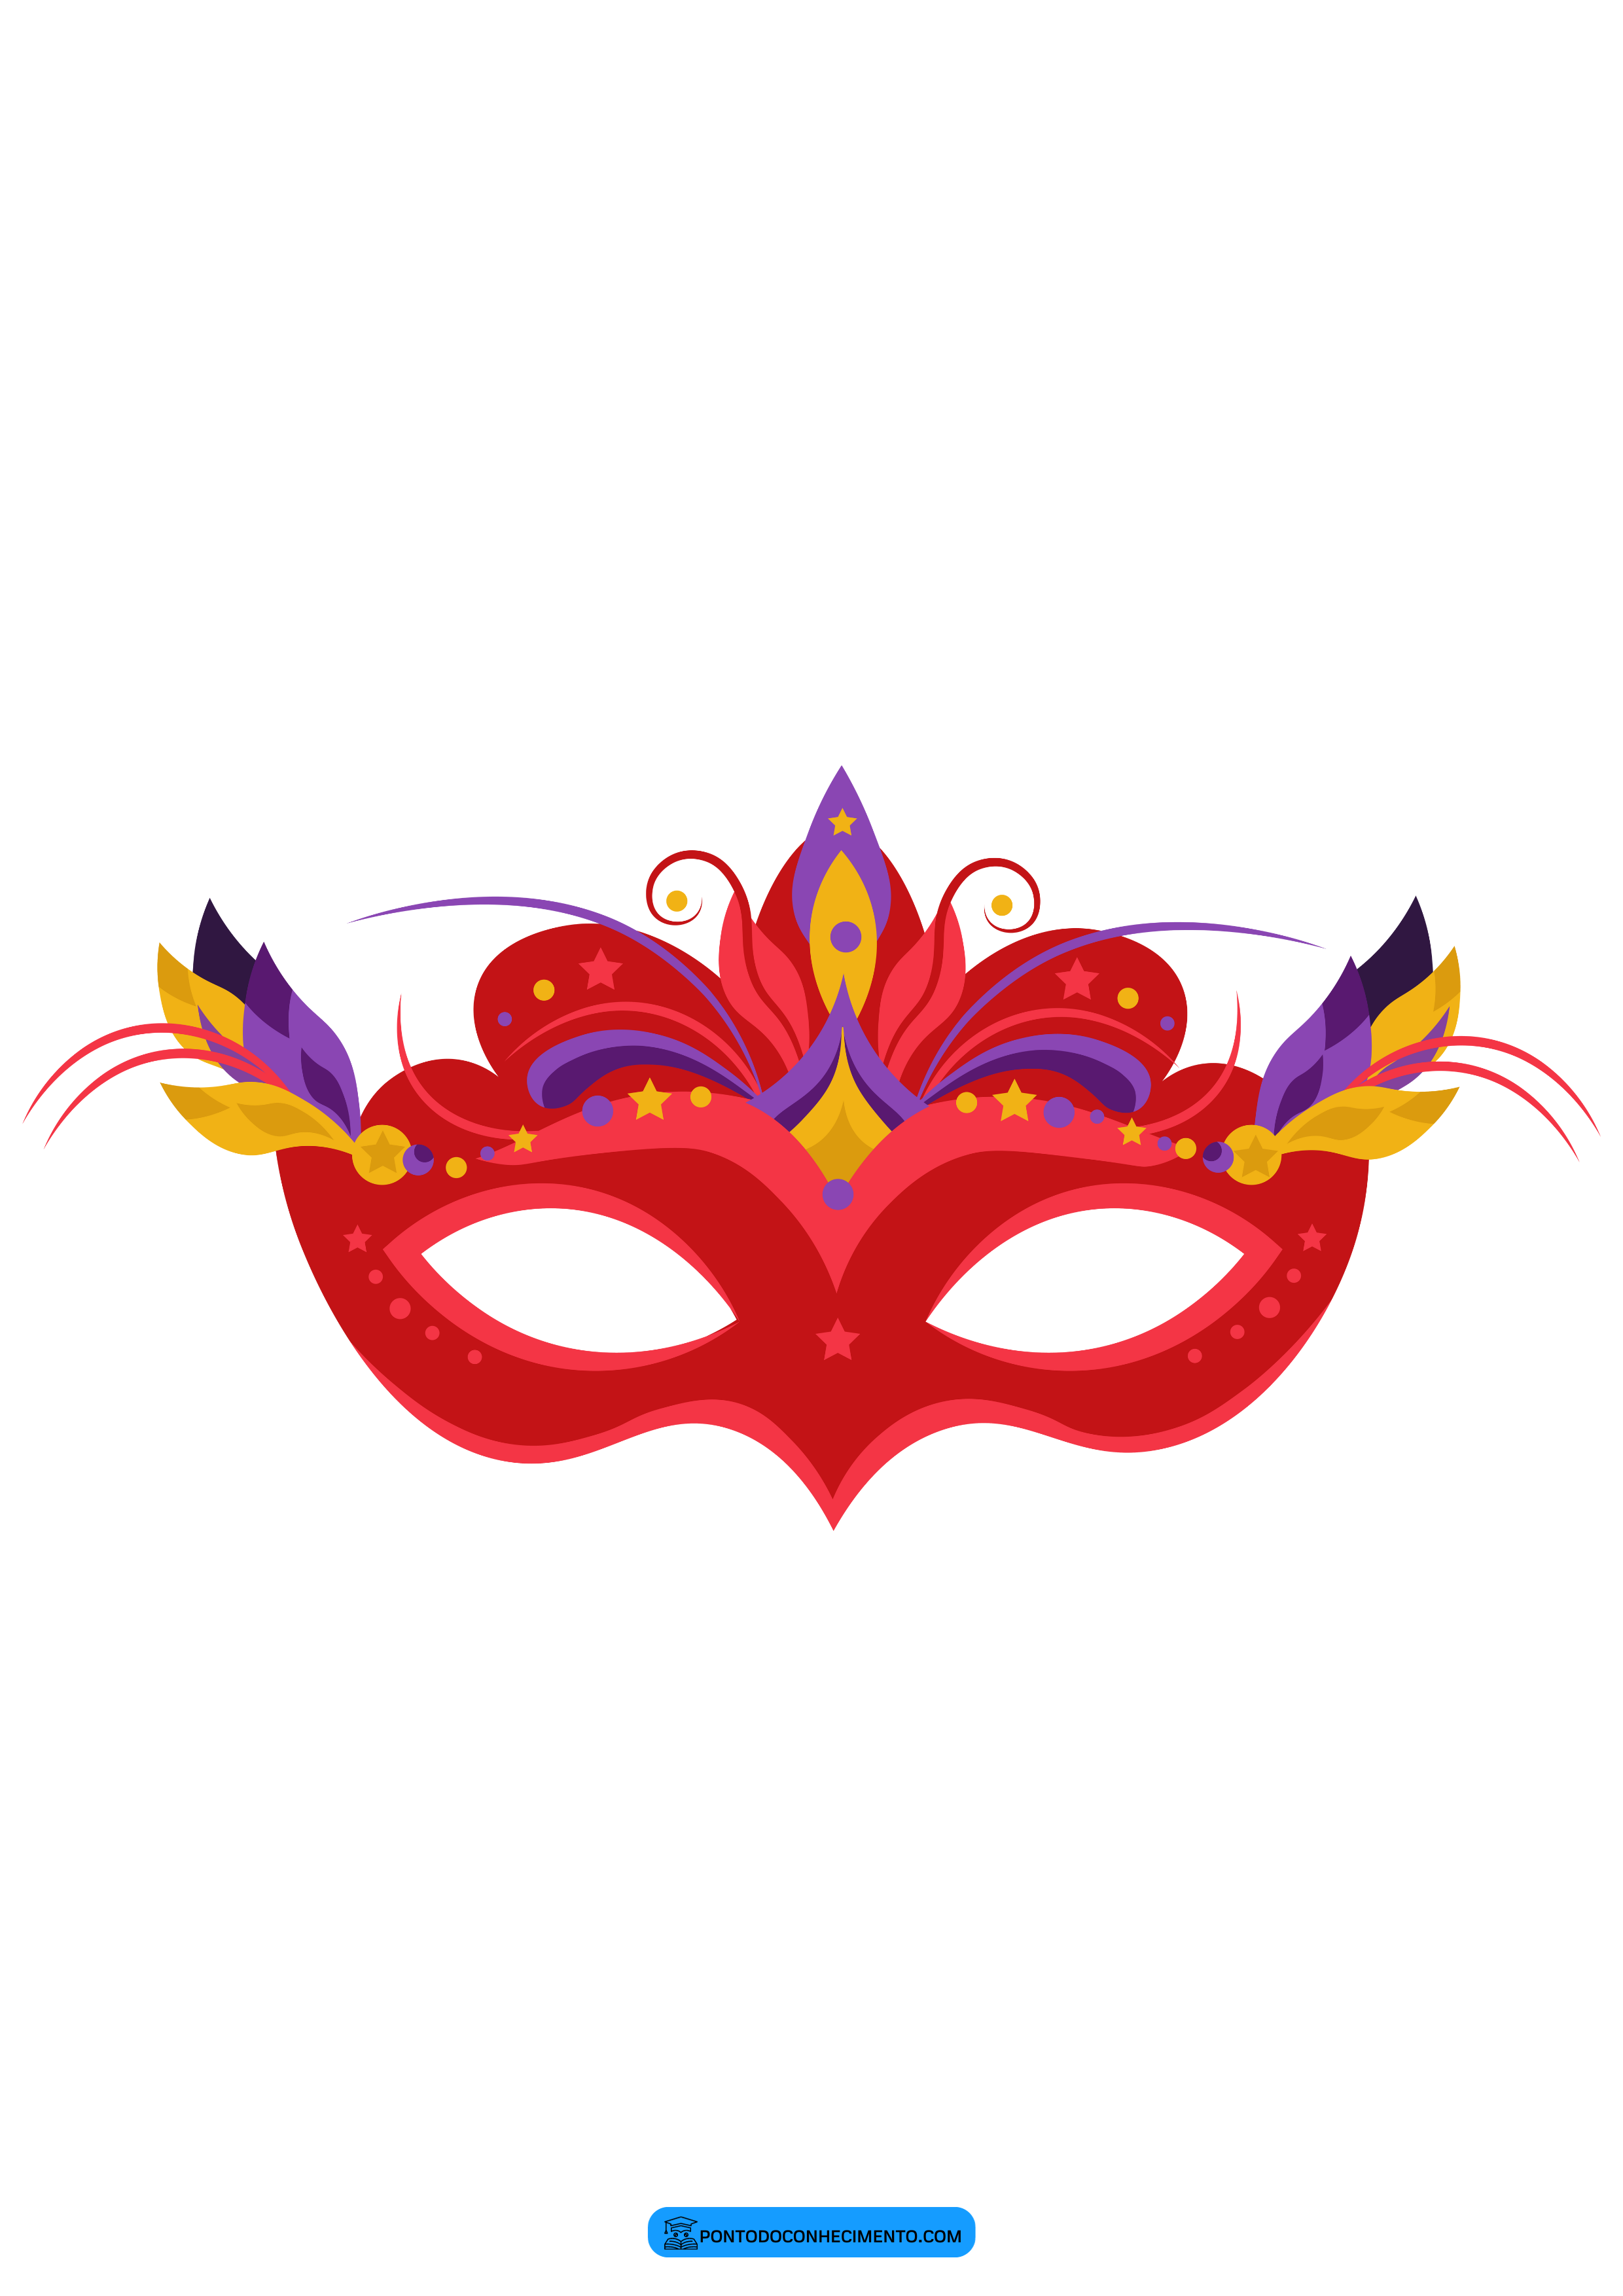 Máscaras de Carnaval para pintar